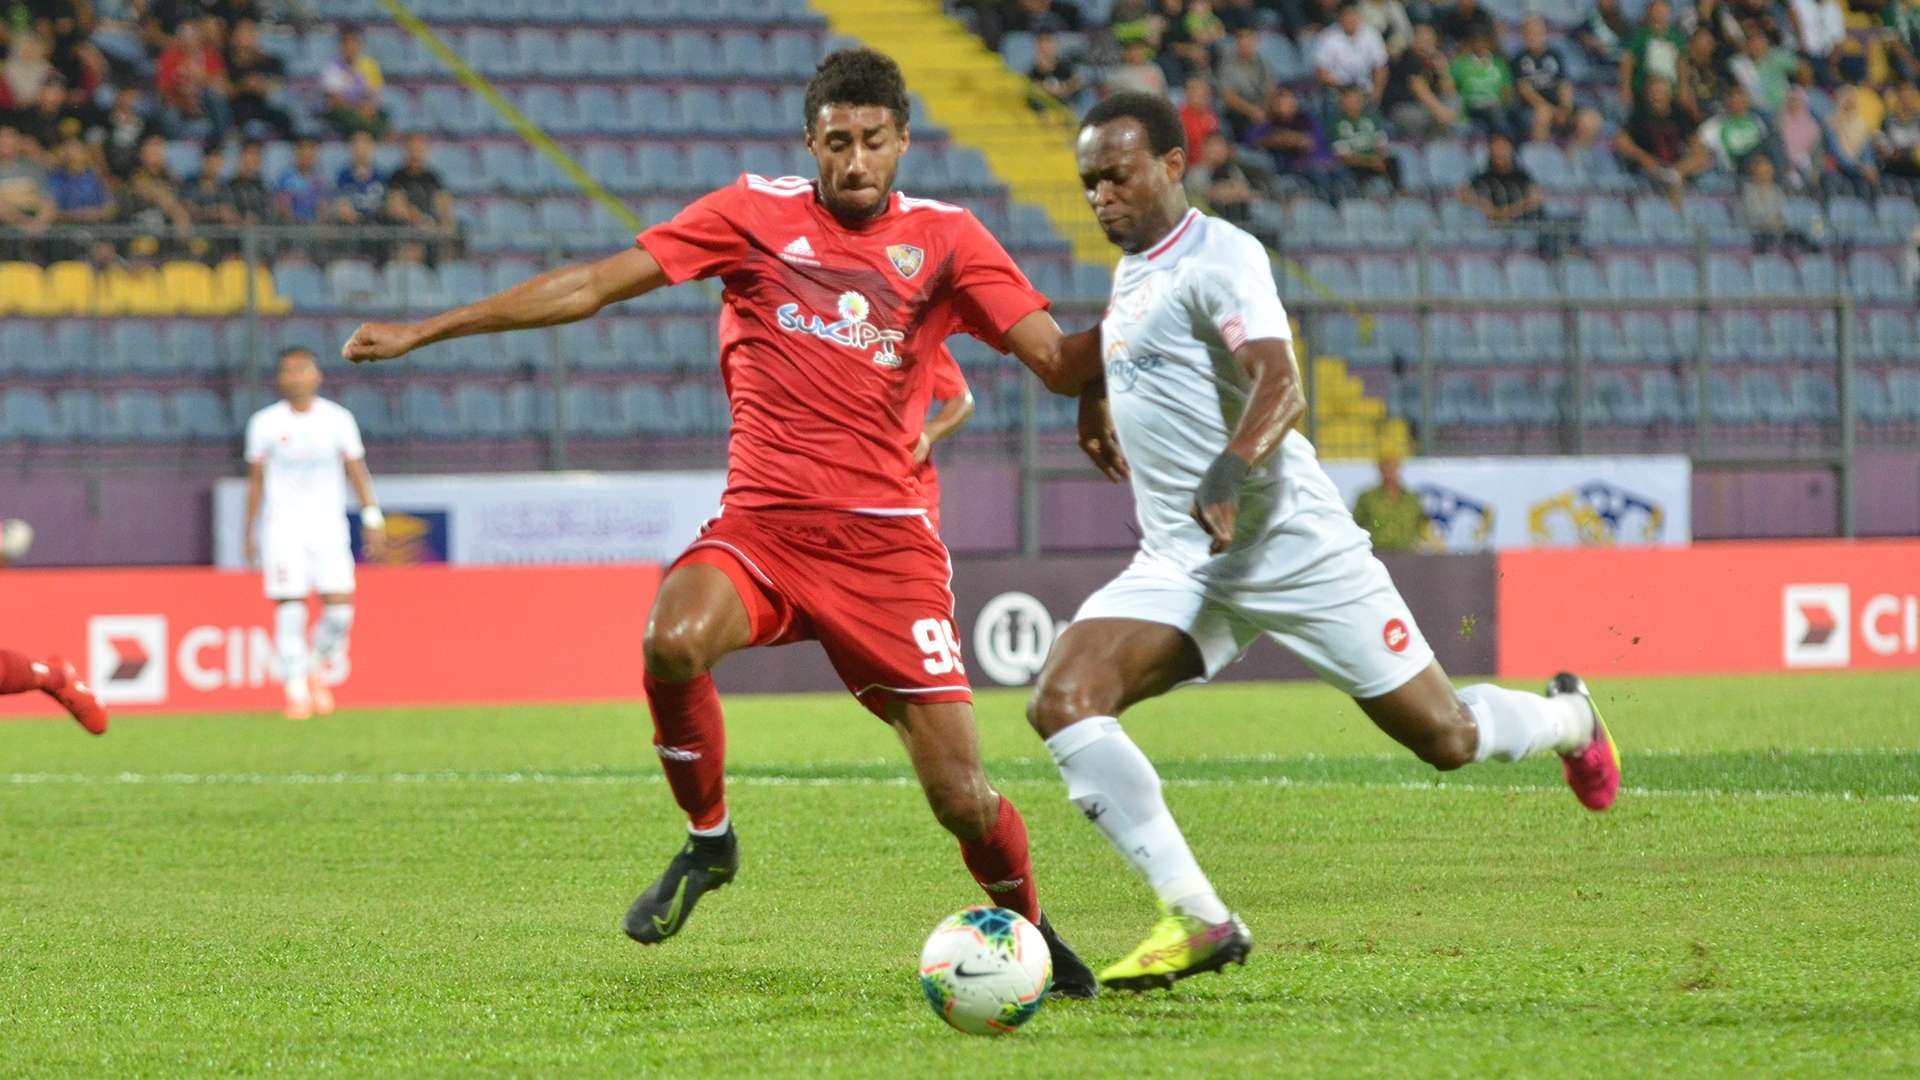 Victor Nirennold, Uche Agba, UiTM v Melaka, Super League, 29 Feb 2020